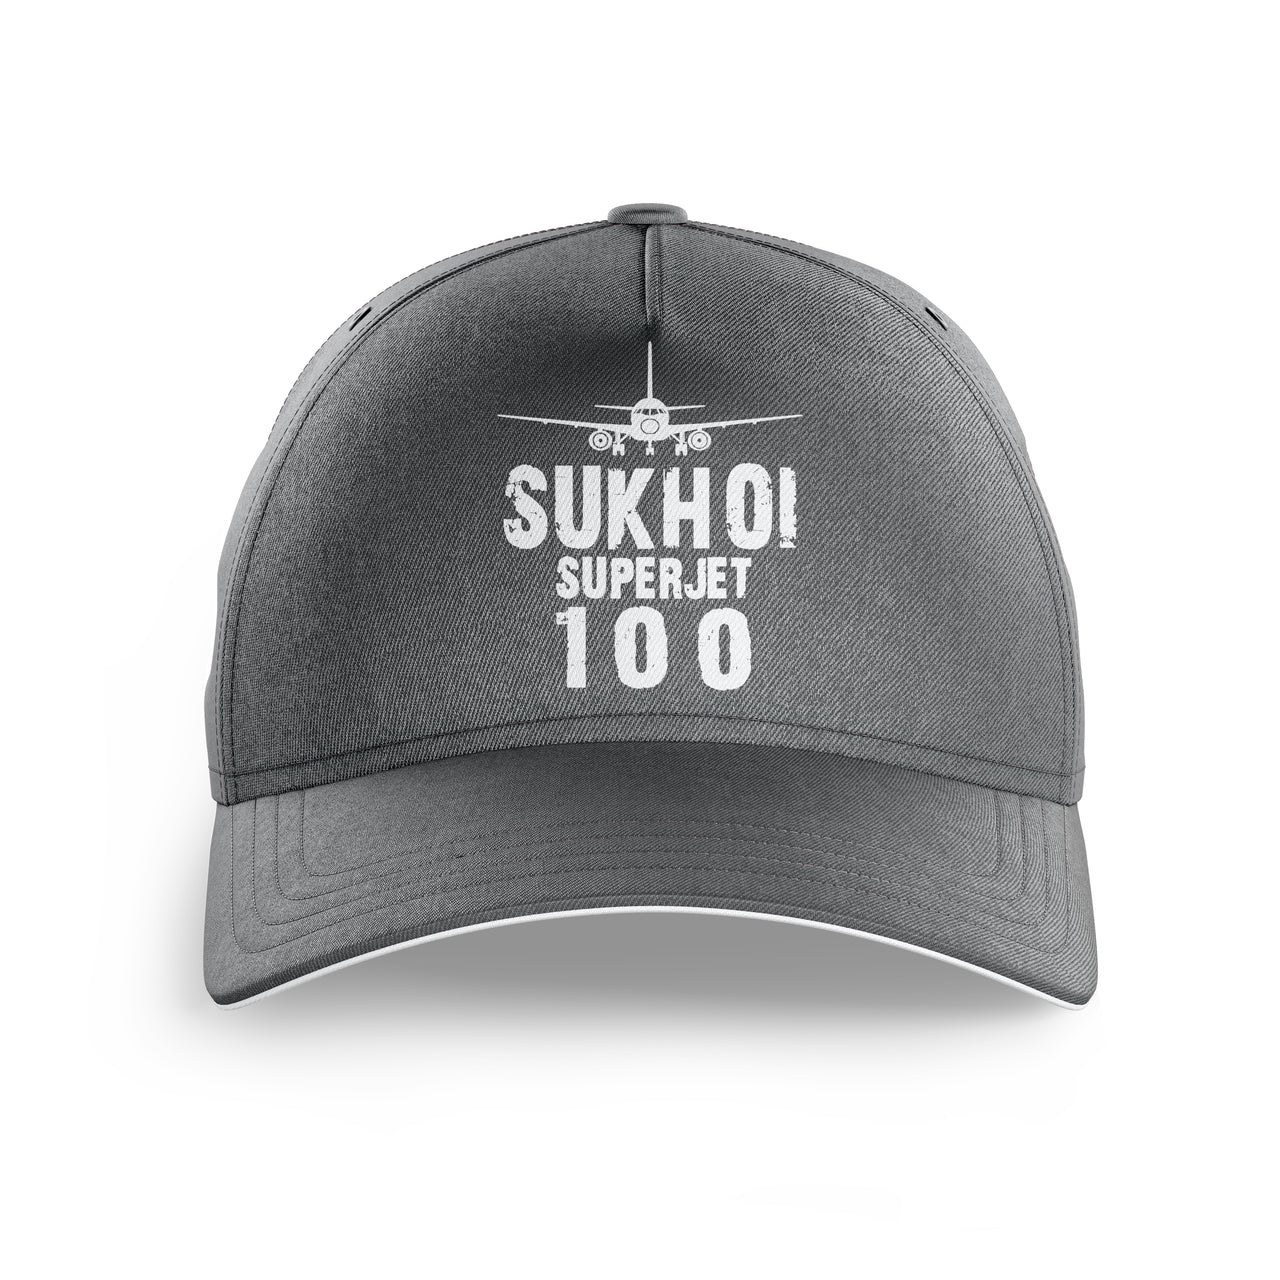 Sukhoi Superjet 100 & Plane Printed Hats